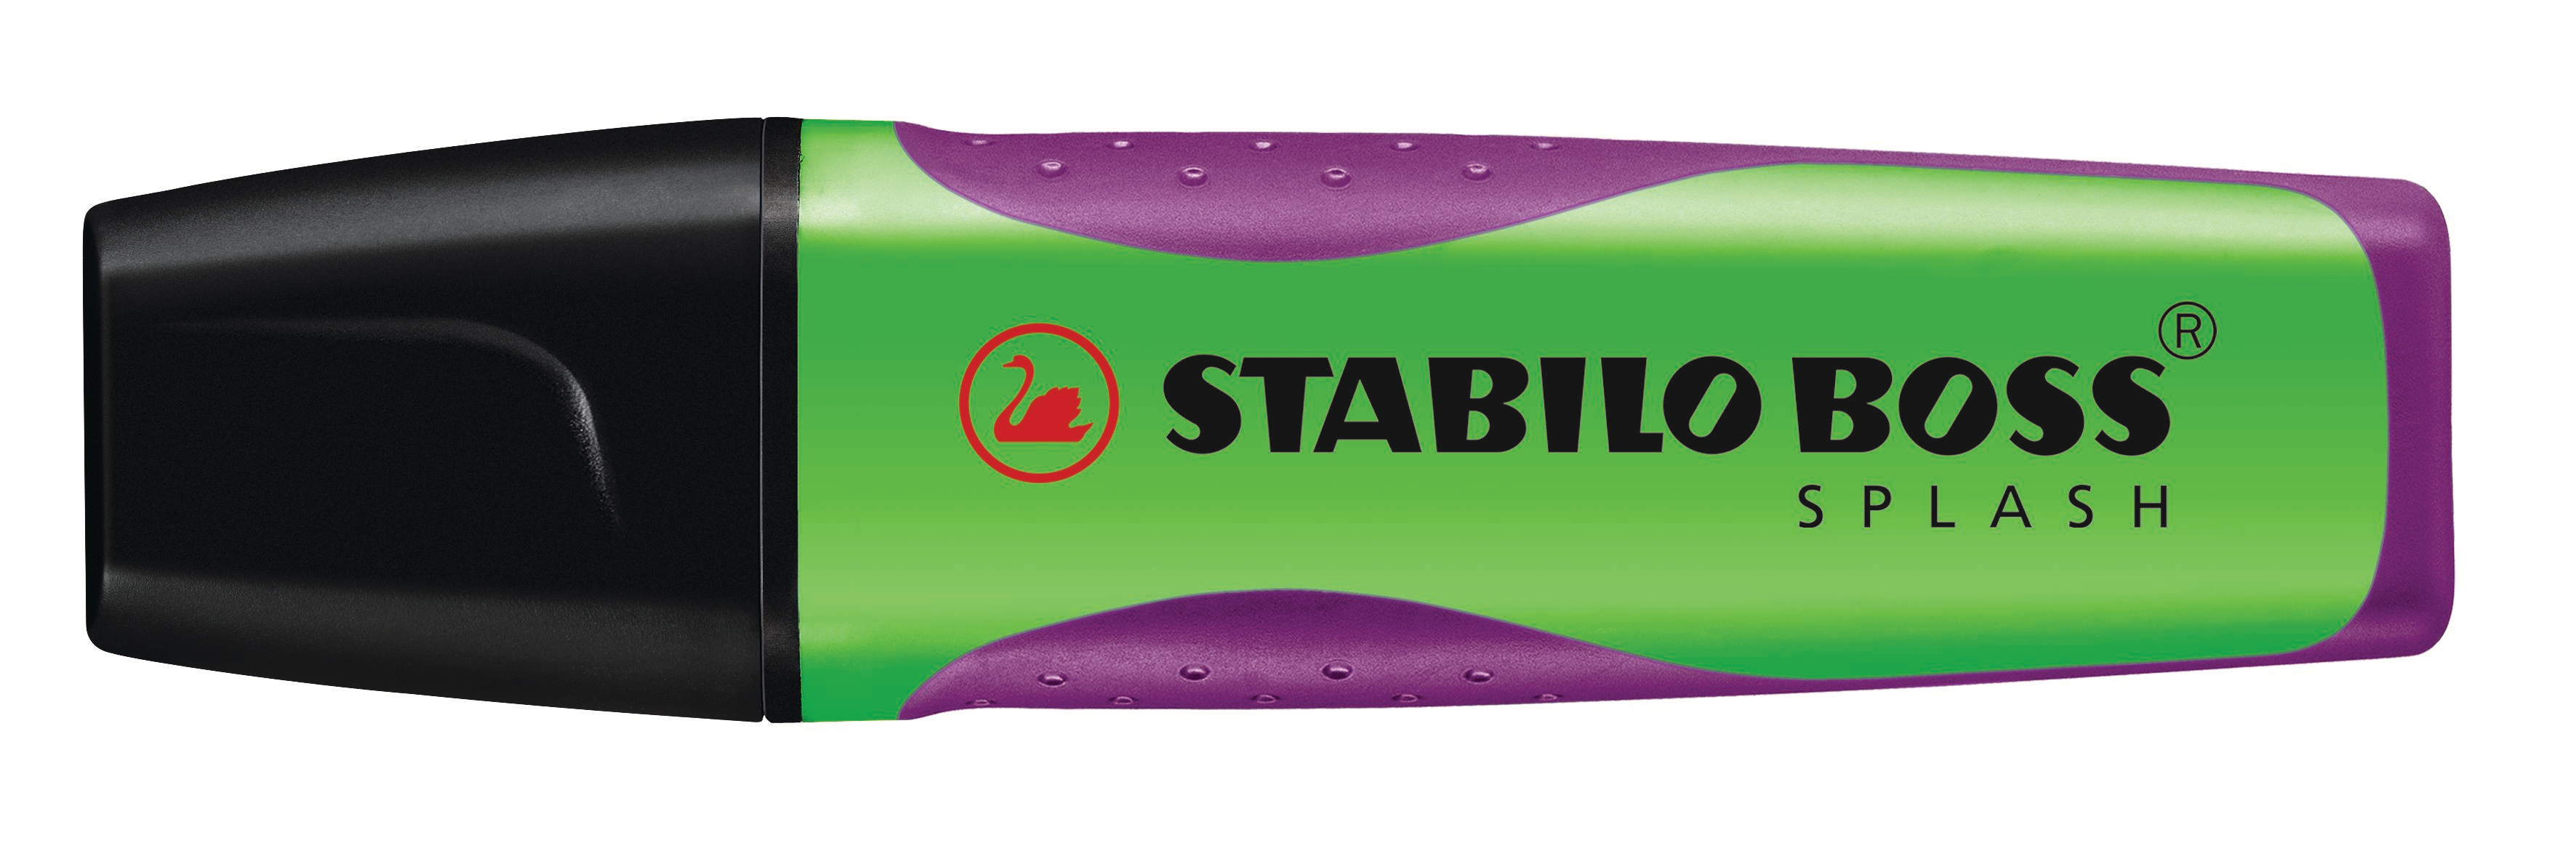 STABILO BOSS SPLASH 75/33 vert